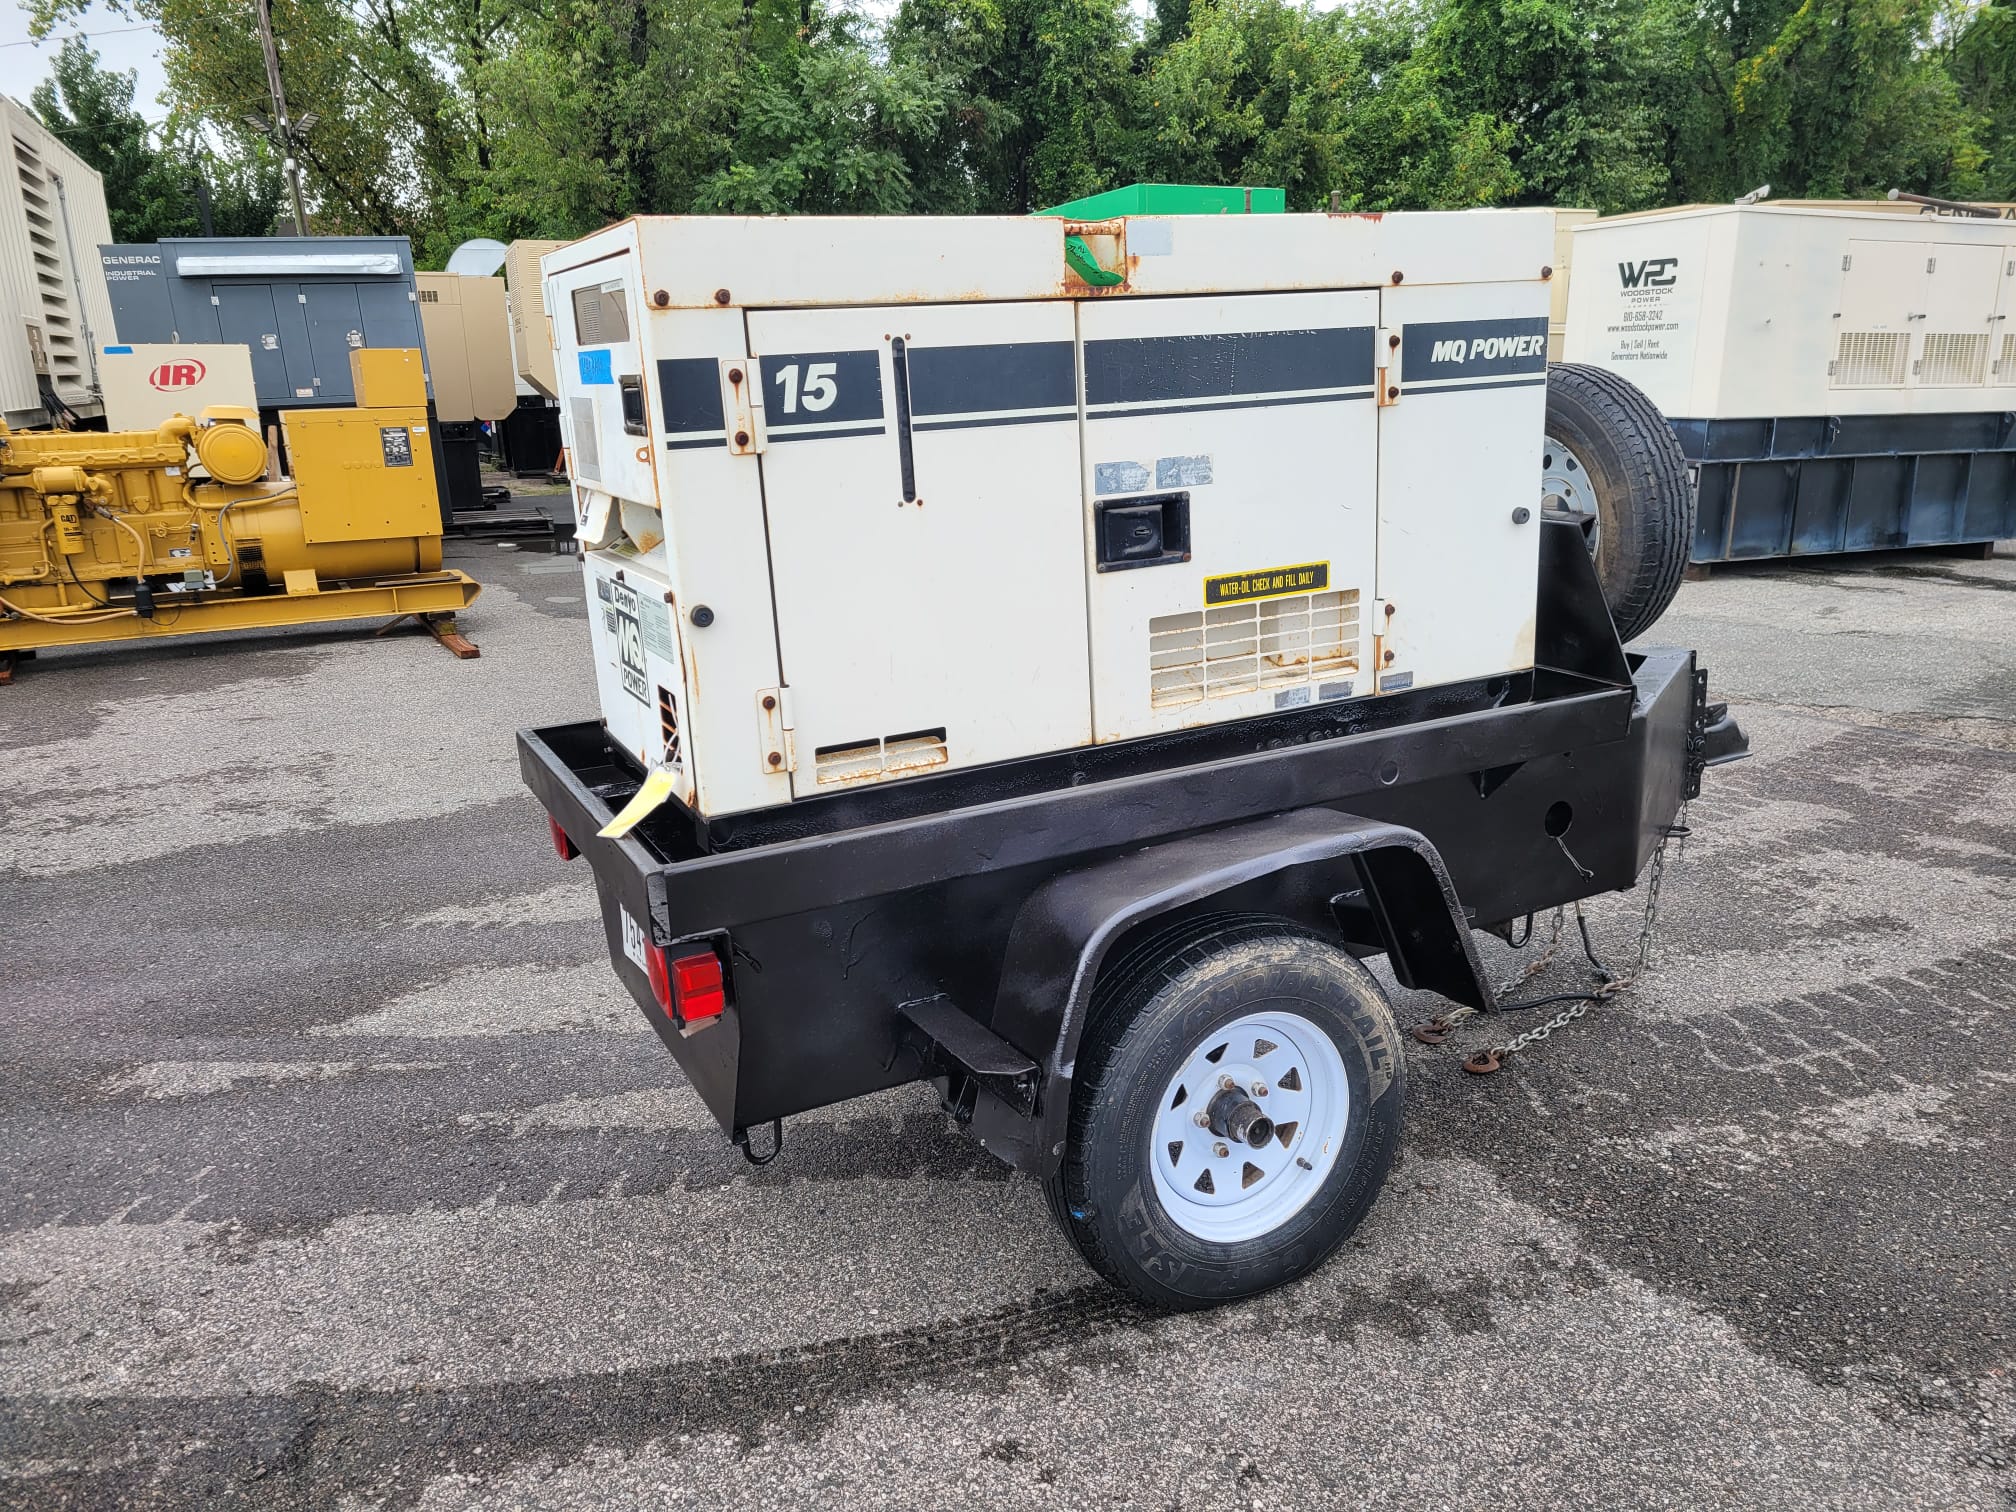 Used 15 kW Multiquip DCA-15SPX3 Portable Diesel Generator – EPA Tier 2